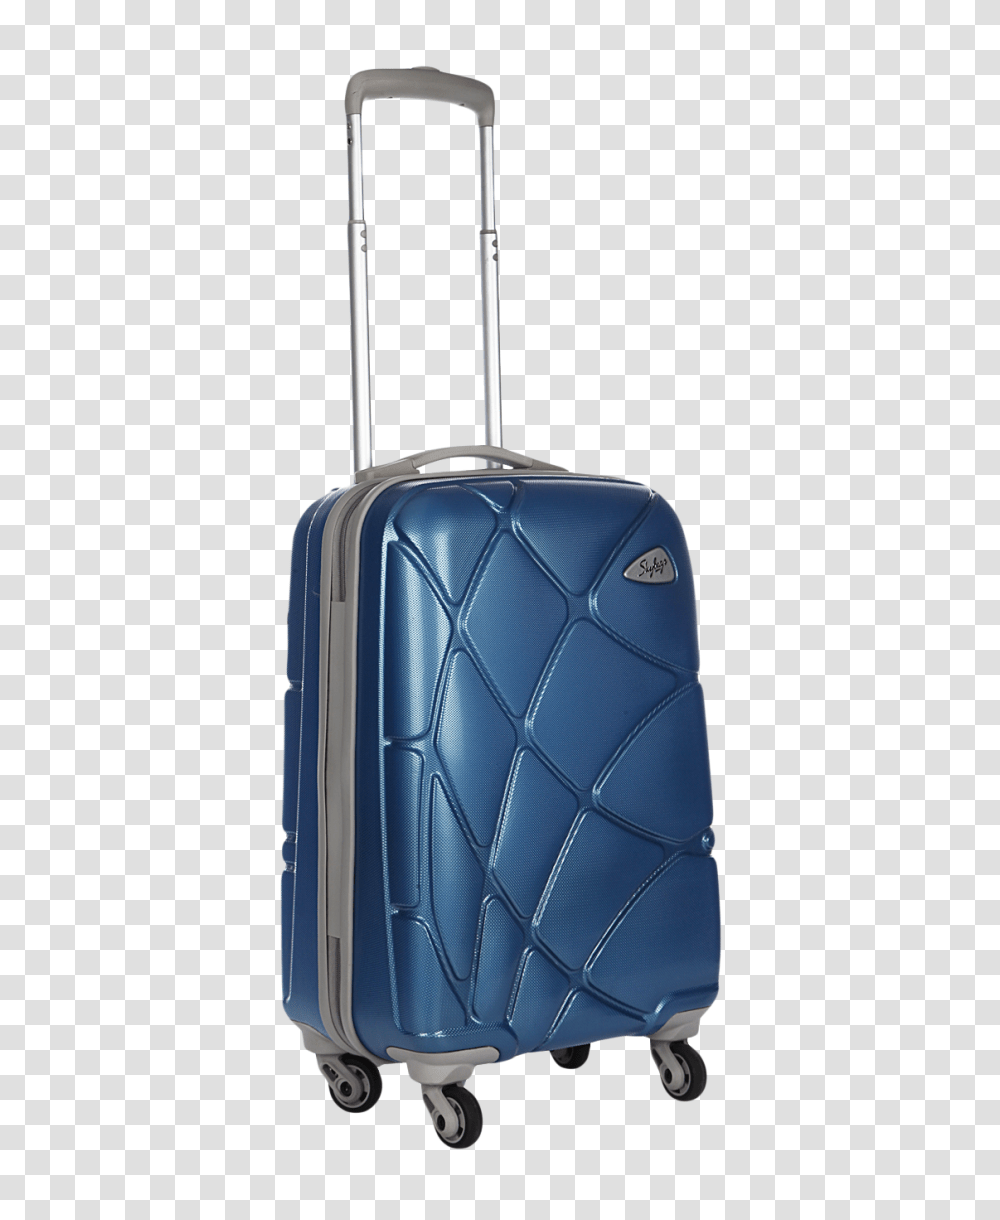 Strolley Suitcase Luggage Image, Backpack, Bag Transparent Png